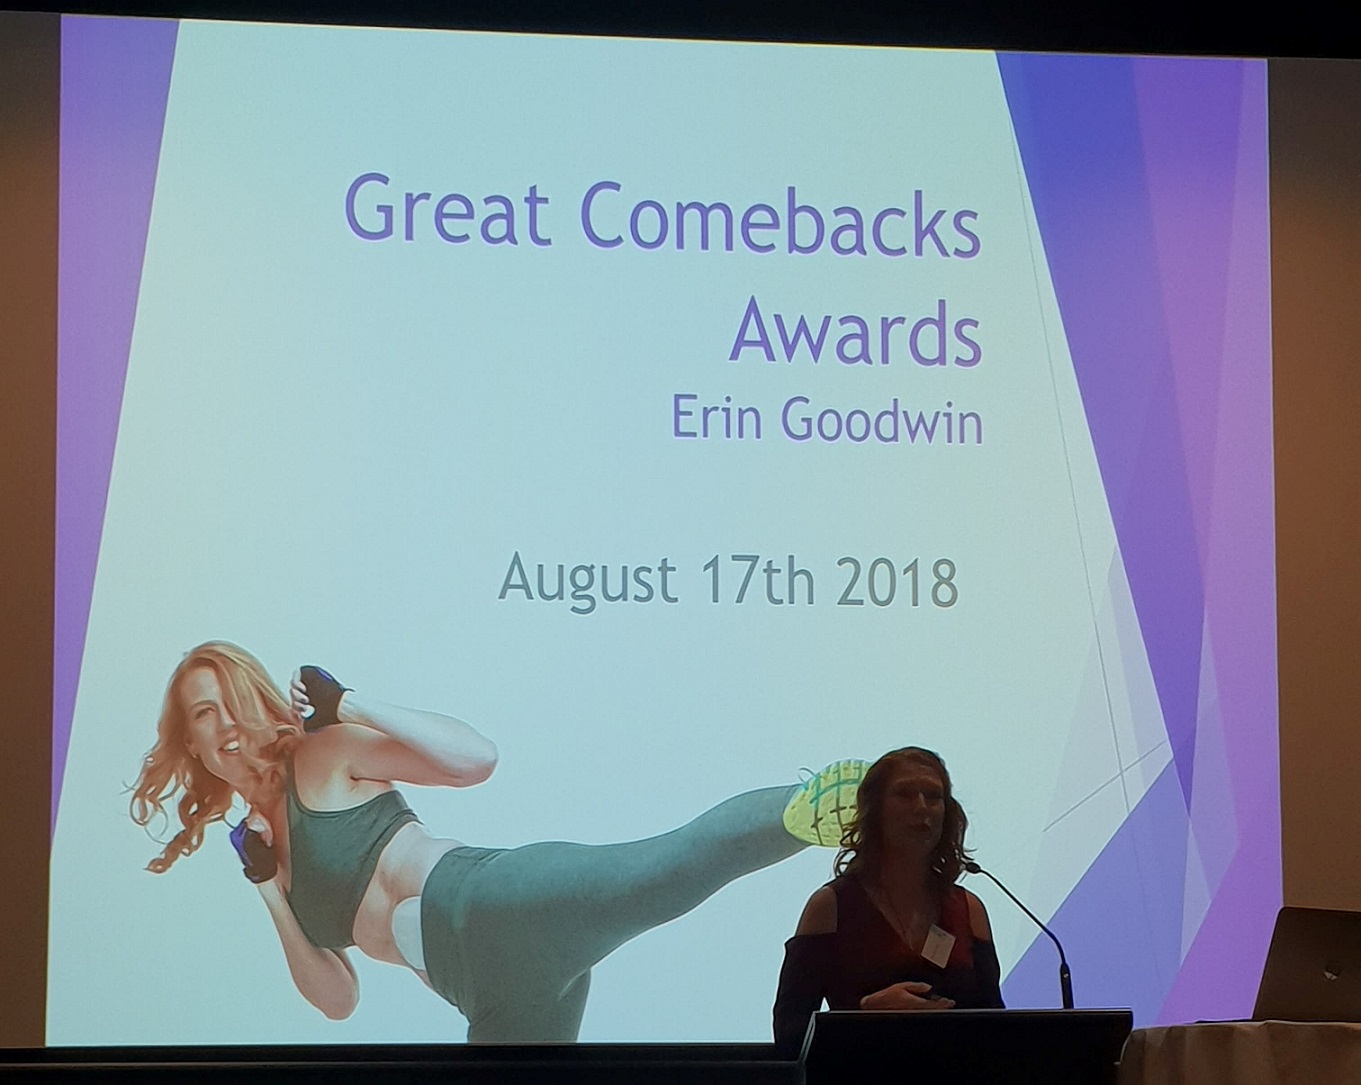 Great comebacks awards 2018